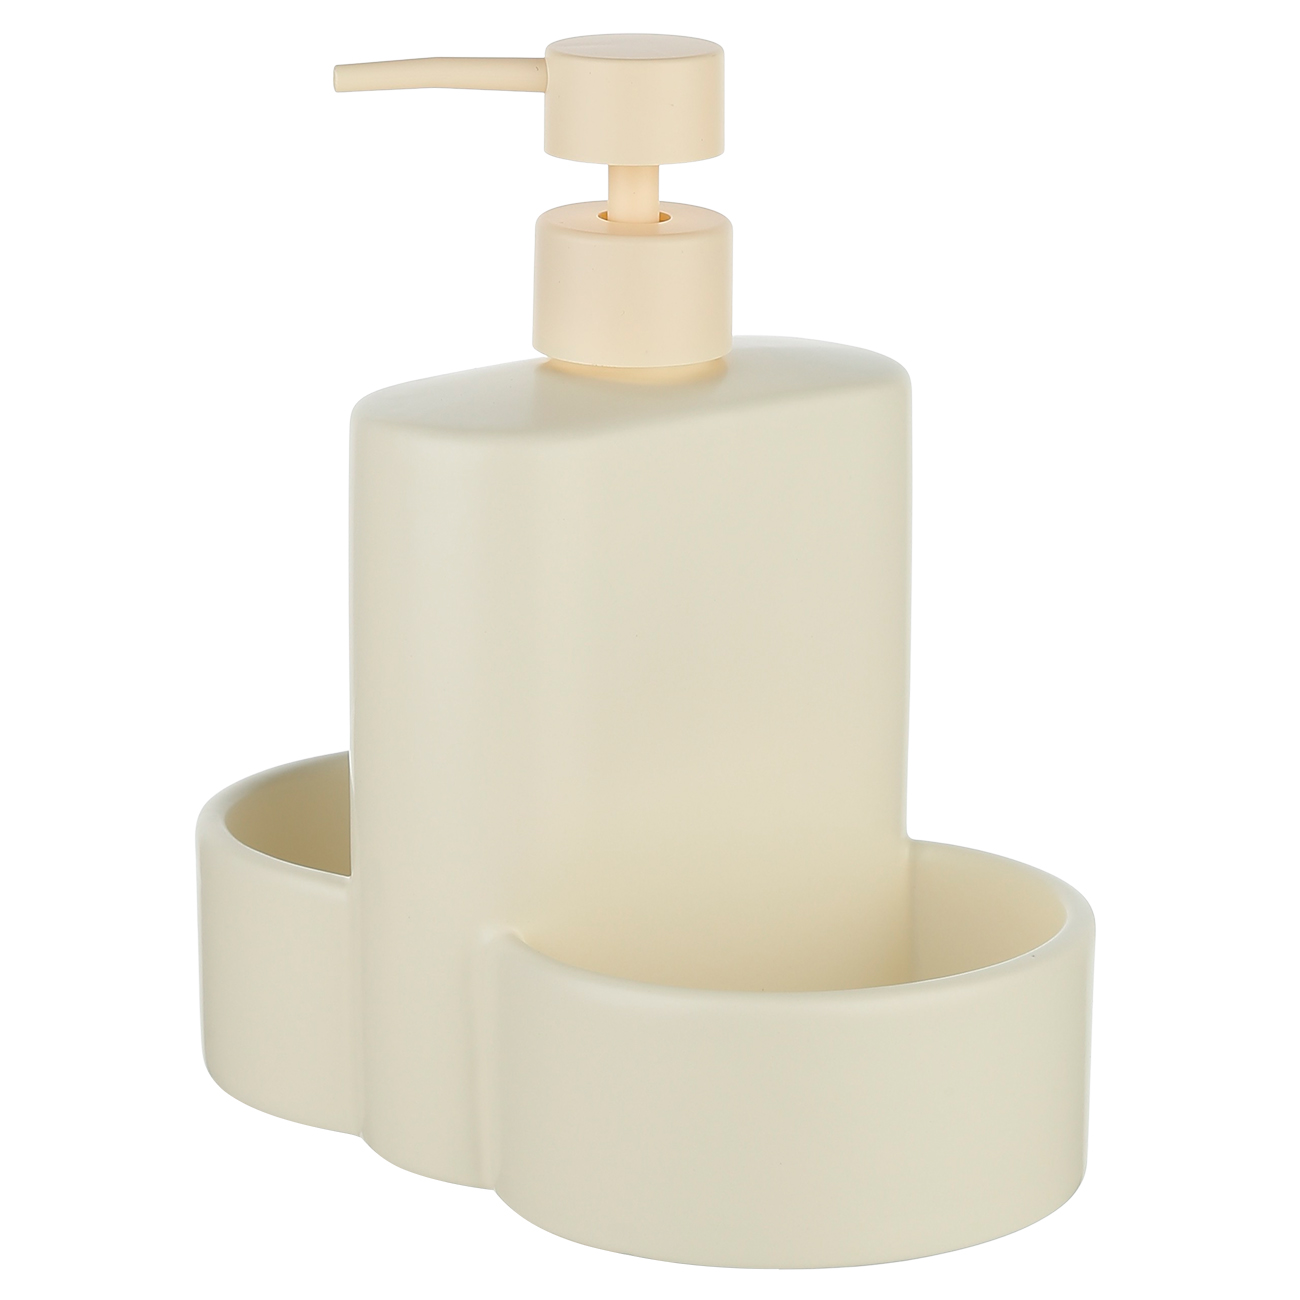 Detergent dispenser, 380 ml, organizer, 2 compartments, ceramic, milk изображение № 2